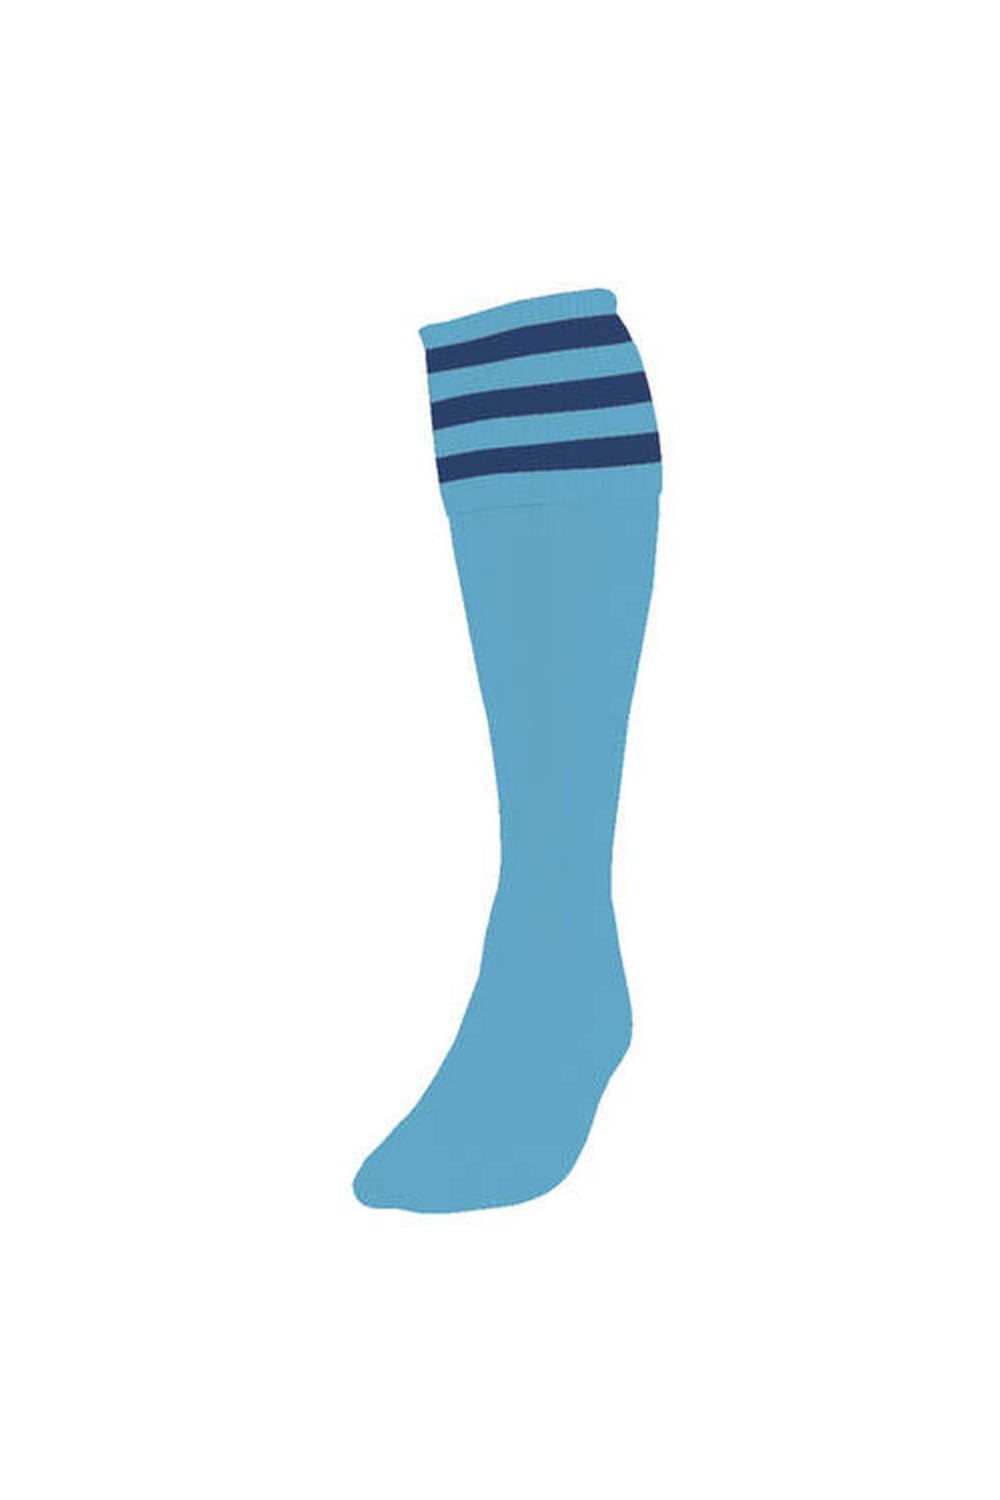 Childrens/Kids Football Socks (Sky Blue/Navy)